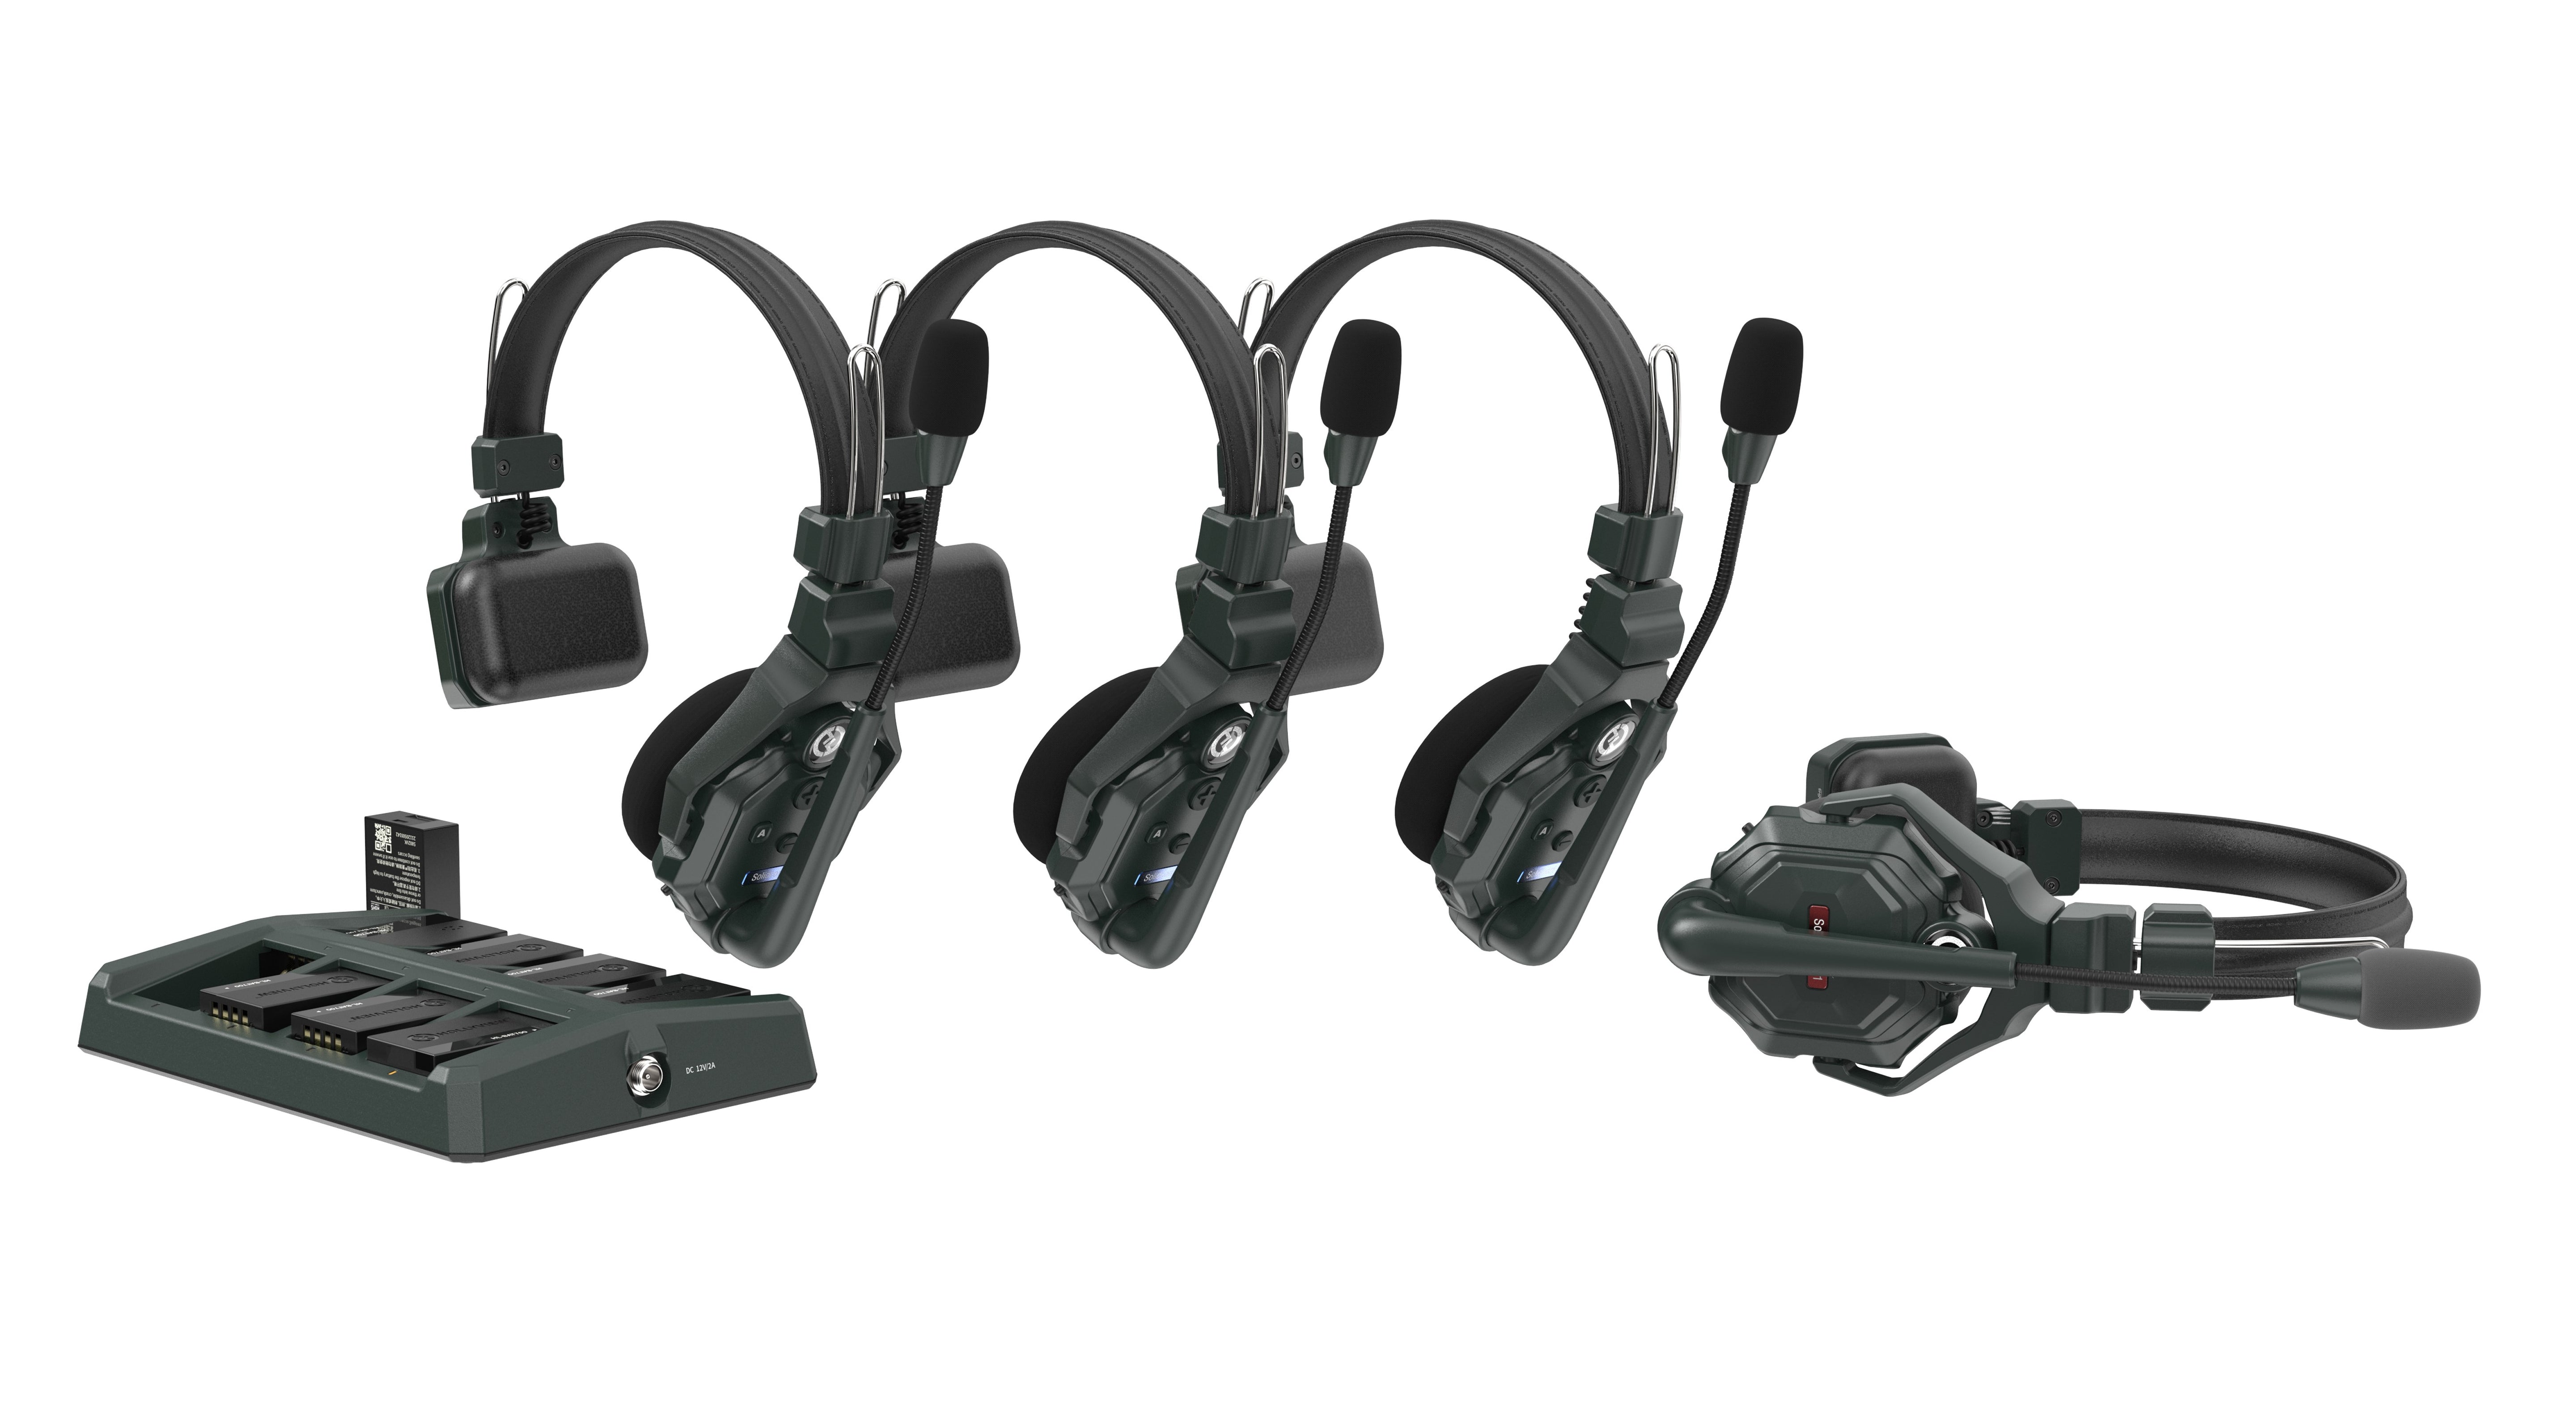 Hollyland Solidcom C1 Full Duplex Wireless Intercom System with 4 headsets HL-Solidcom C1-4S